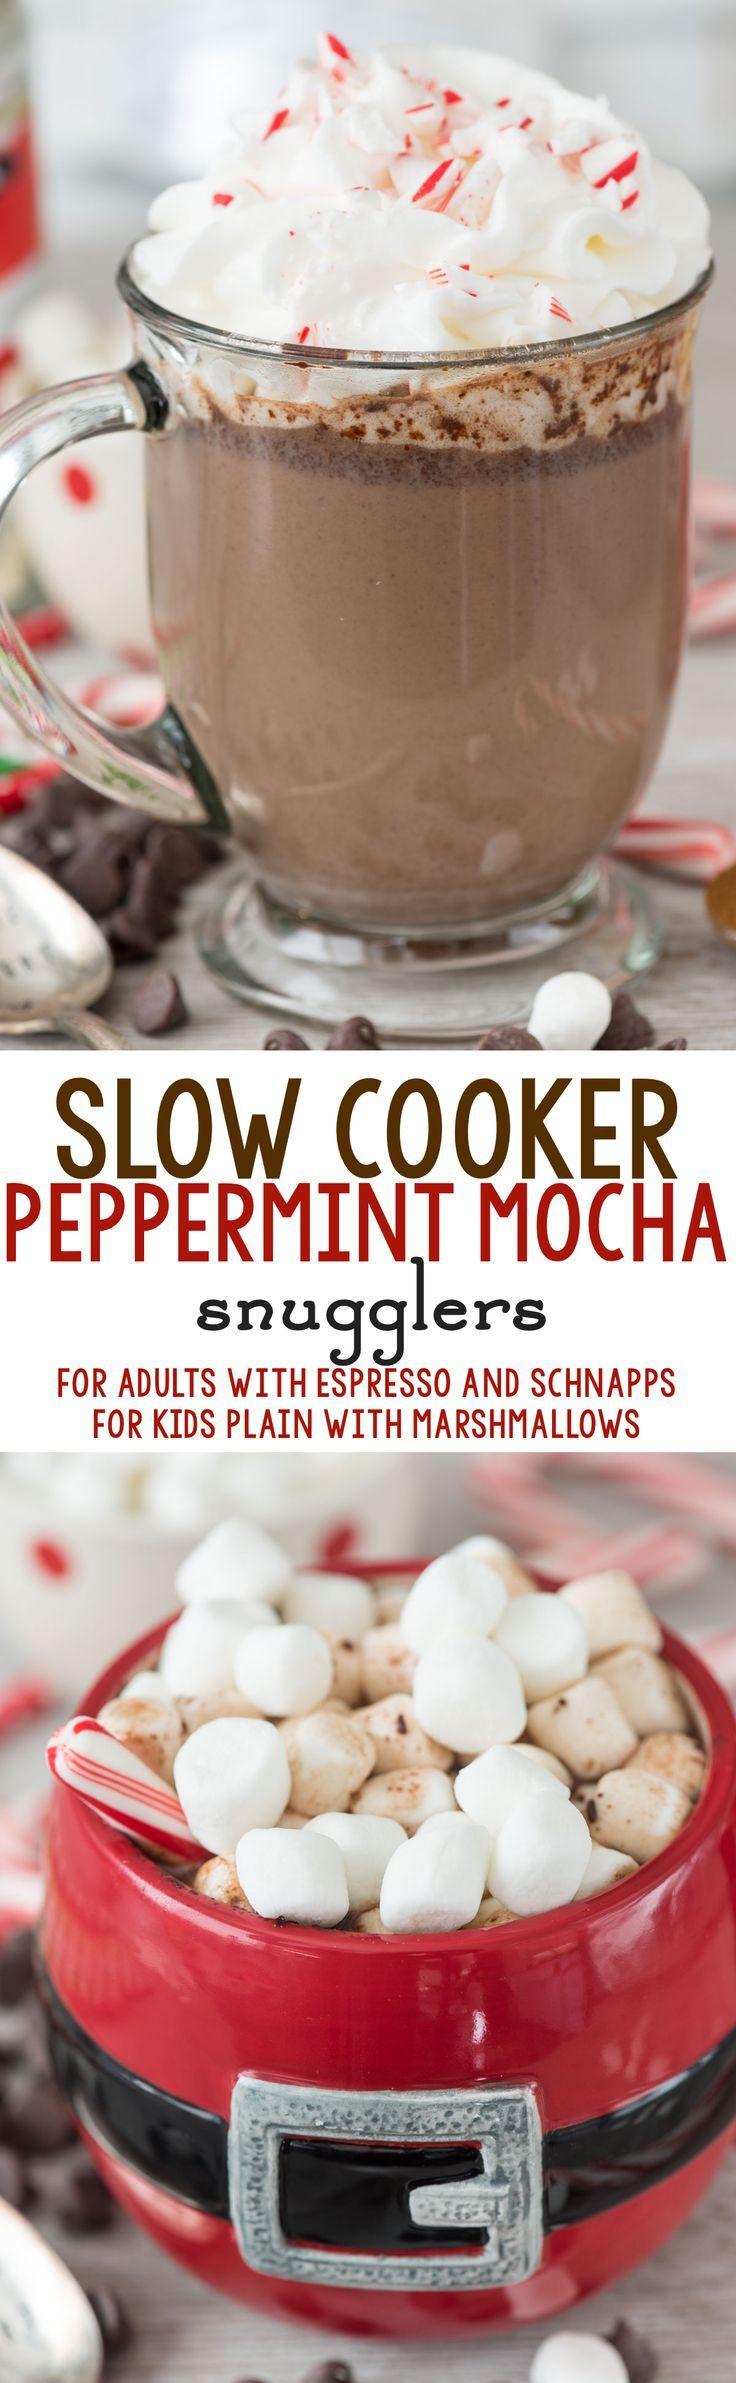 Wedding - Slow Cooker Peppermint Mocha Snugglers